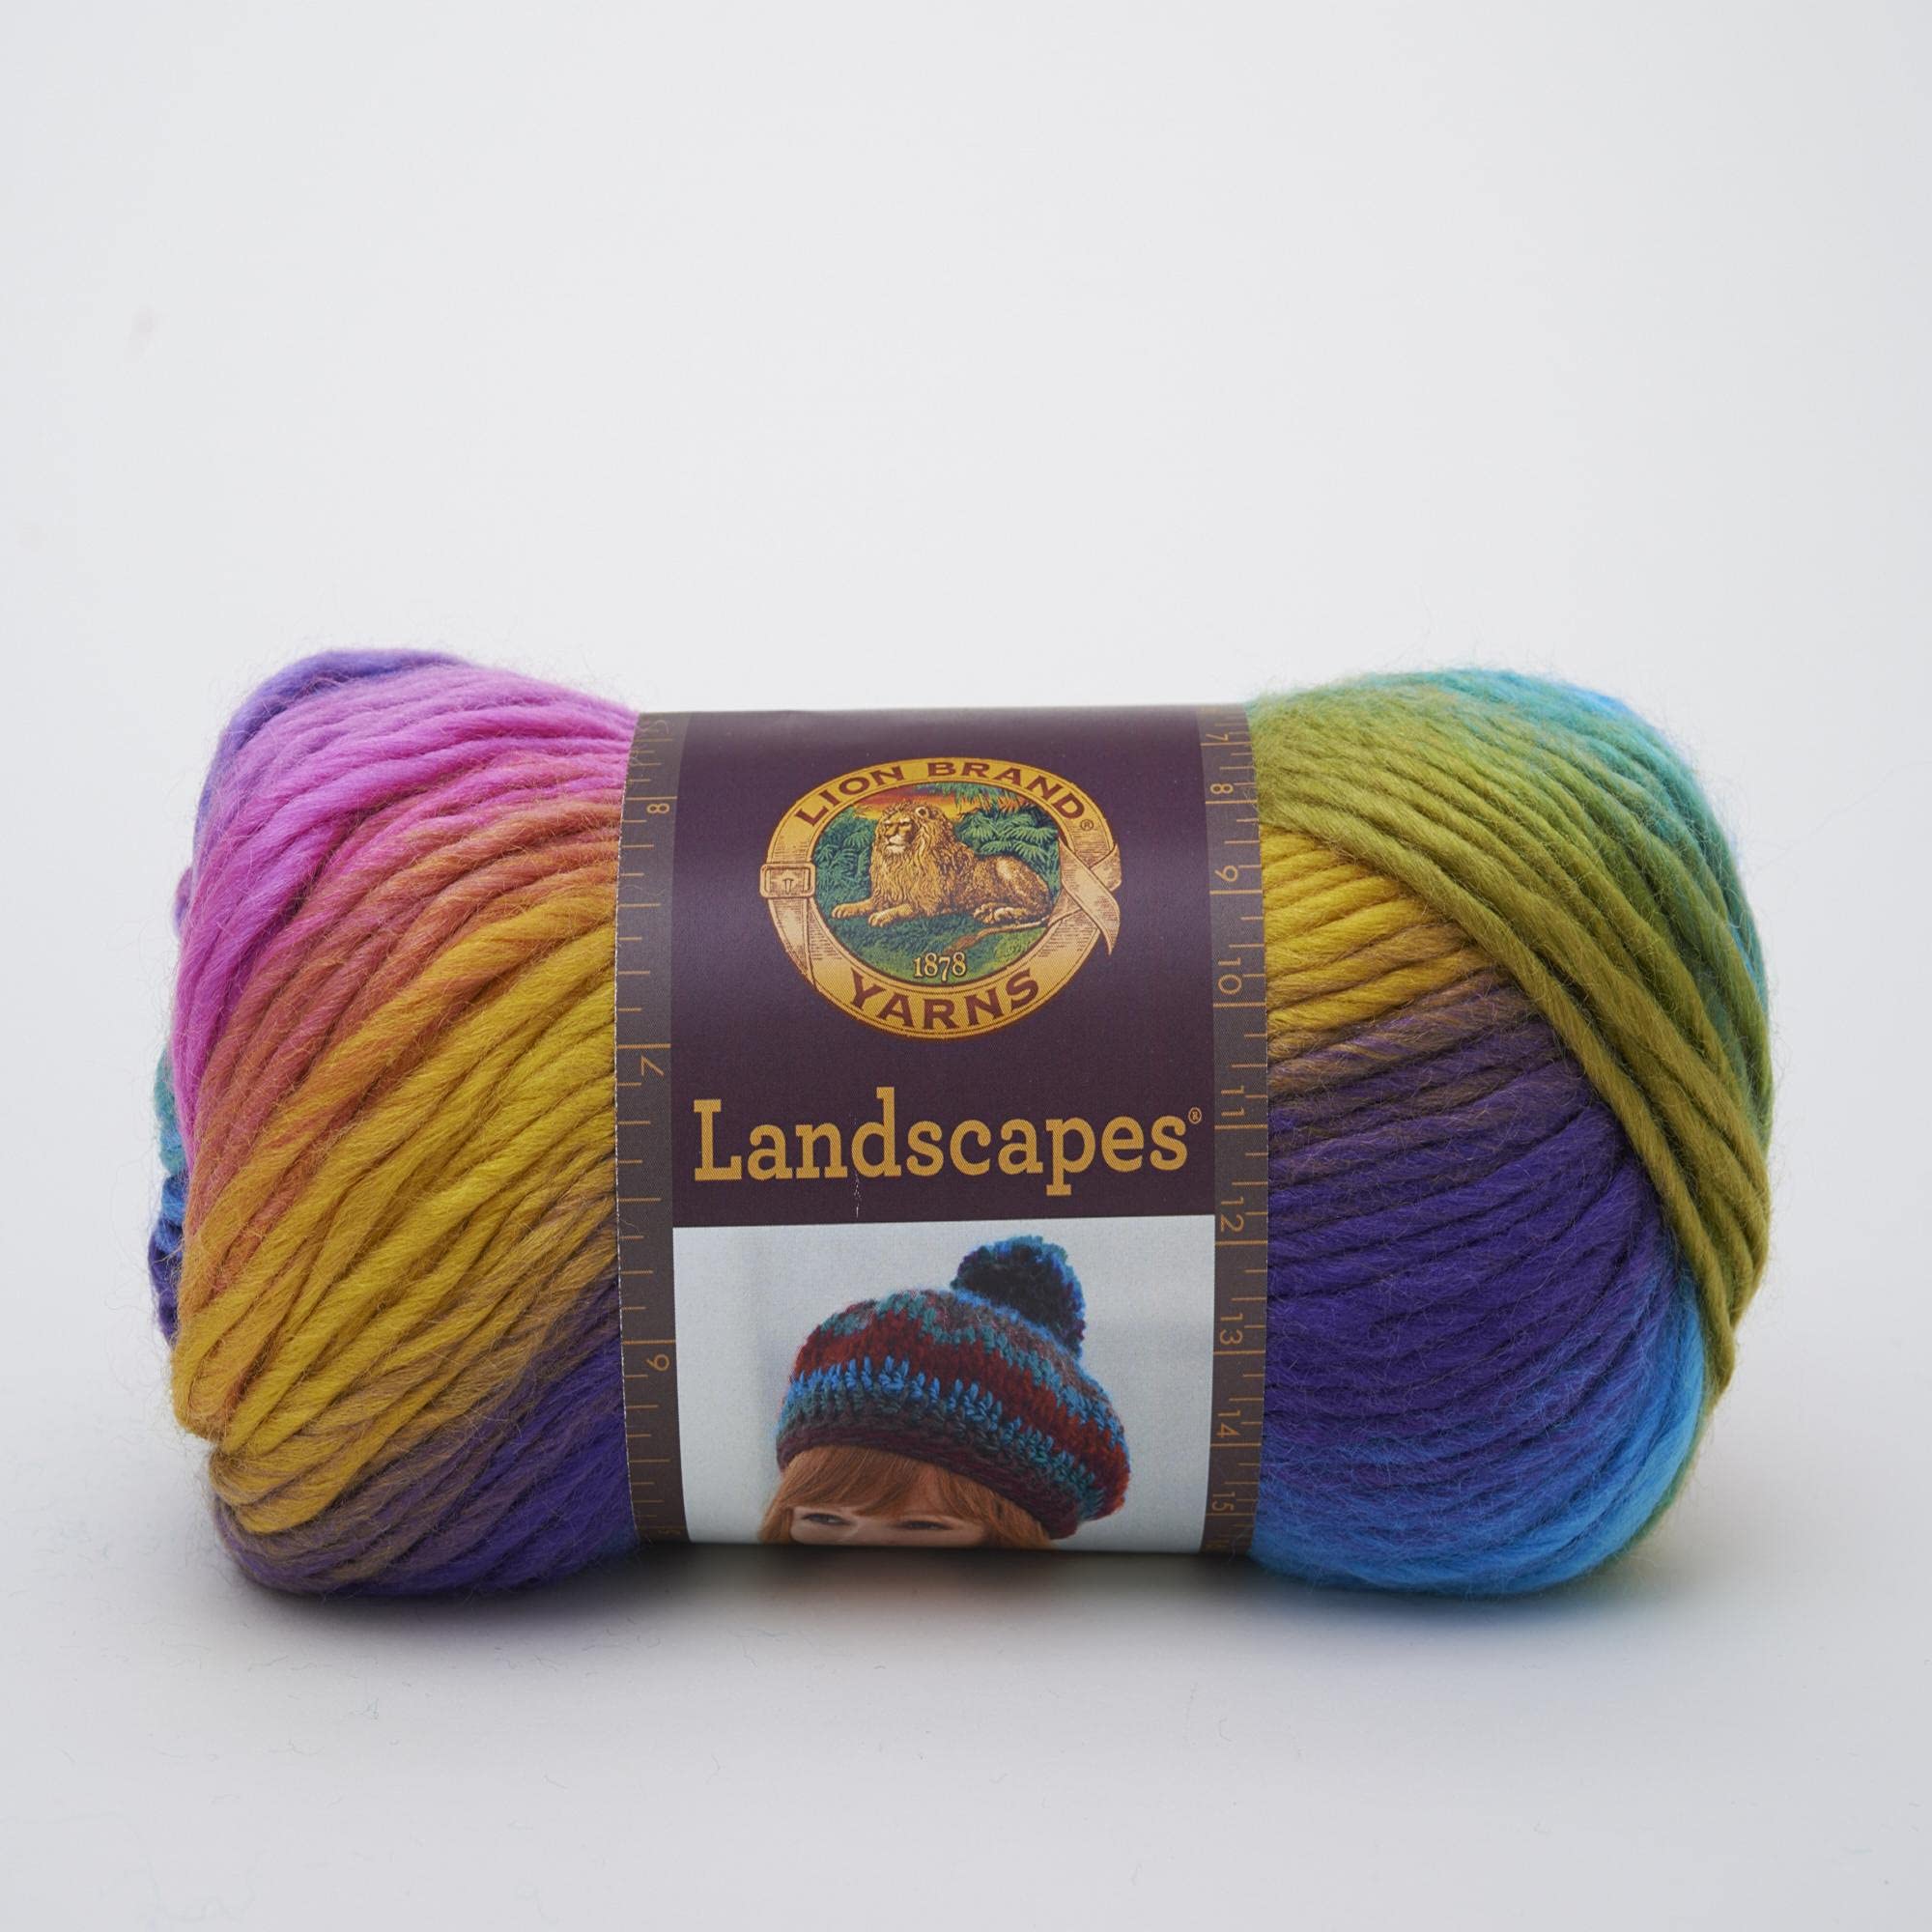 Lion Brand Yarn Landscapes Yarn Multicolor Yarn for Knitting Crocheting Yarn  1-Pack Boardwalk Boardwalk 1 Pack